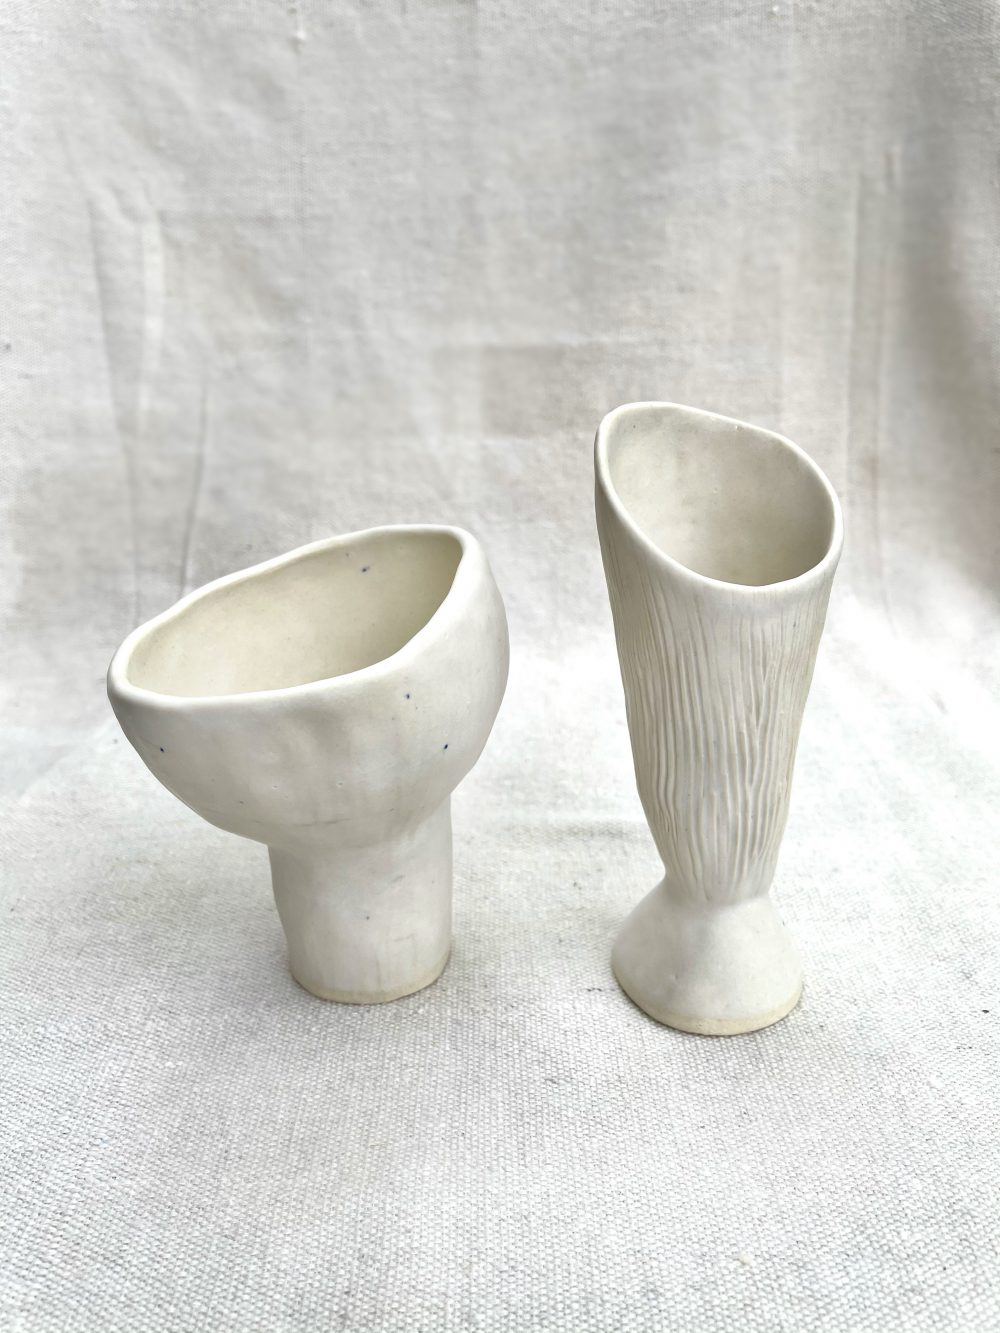 Two small white ceramic vases reminiscent of bird's nest mushroom spores.